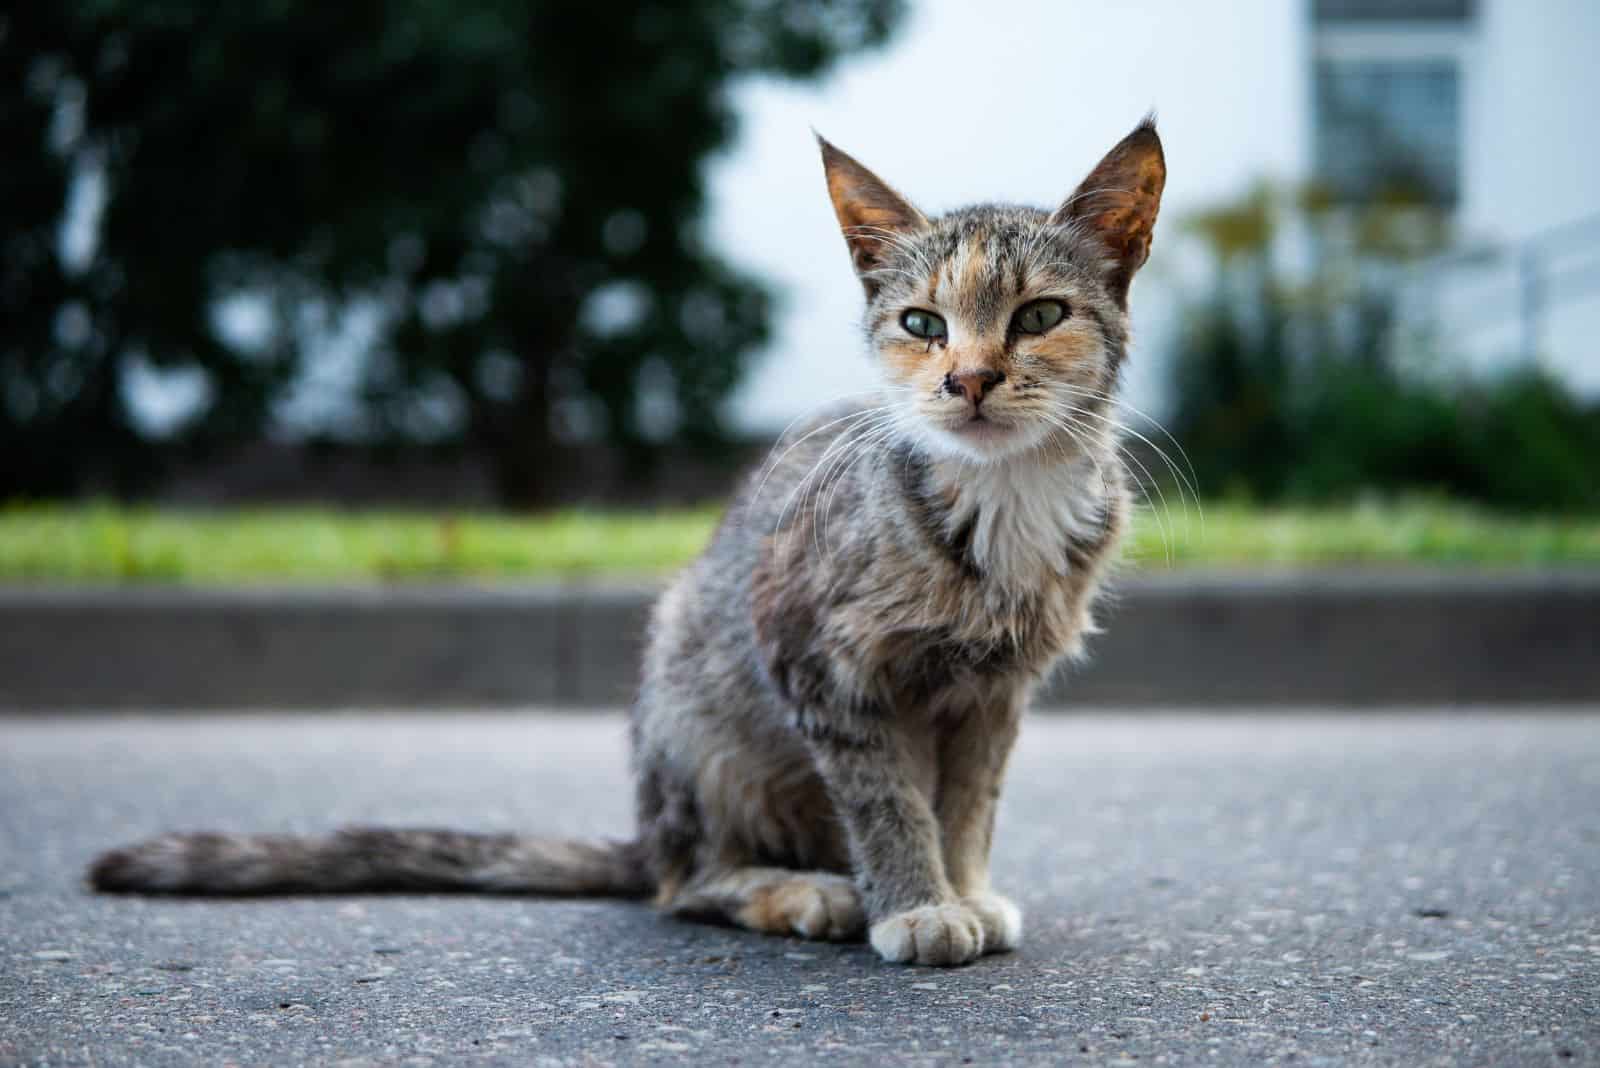 a skinny cat sits on the sidewalk